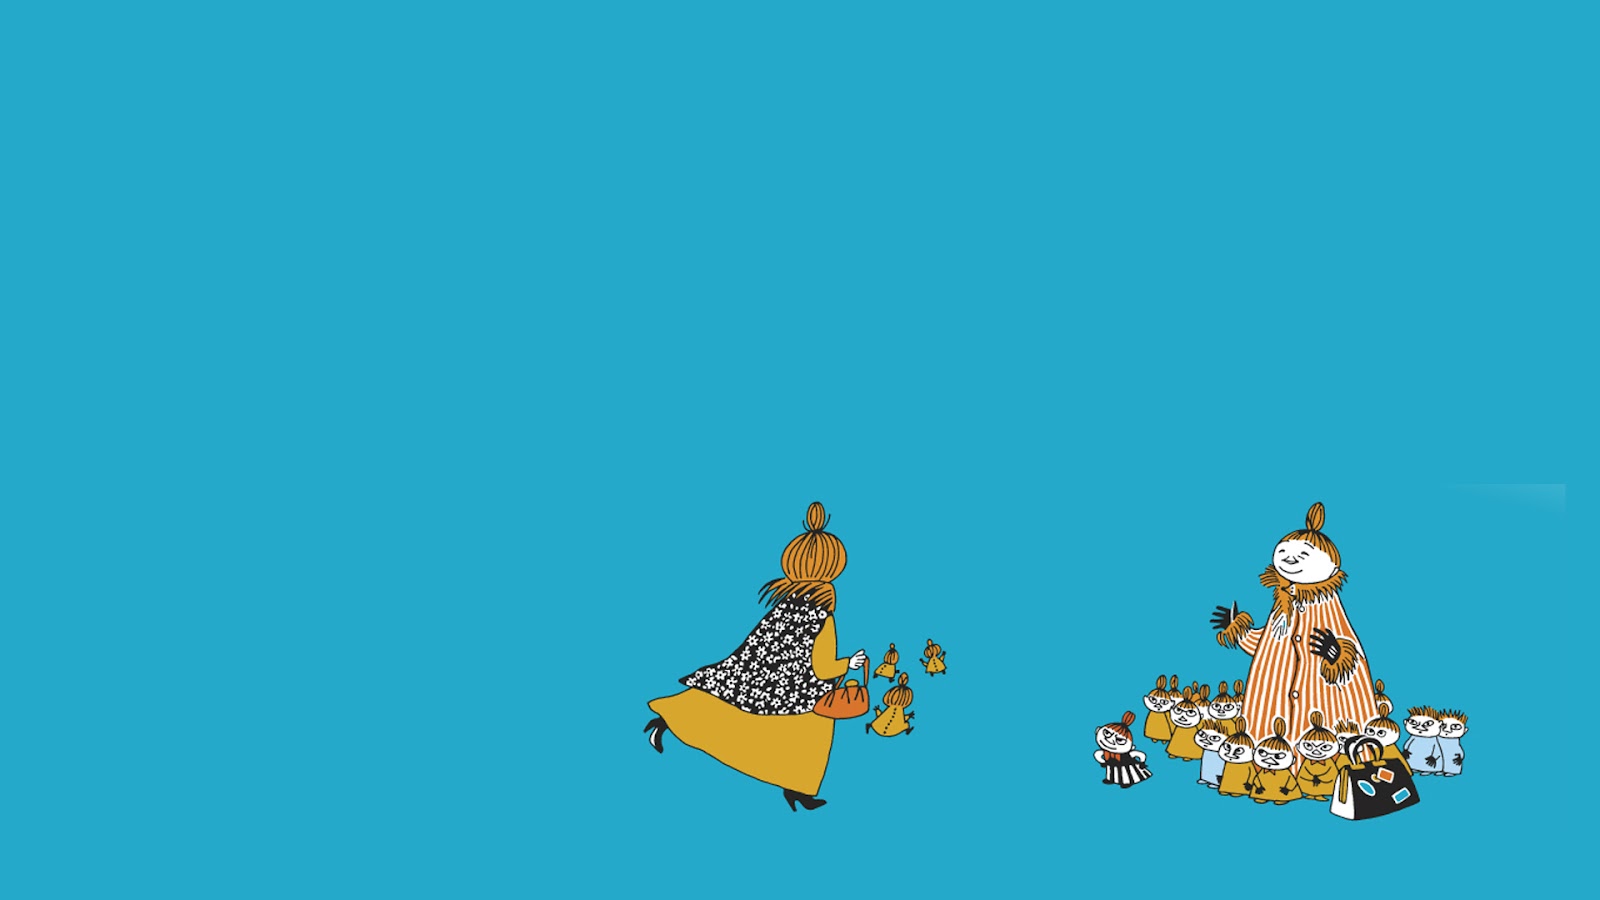 Moomin 1600x900 Wallpaper Teahub Io